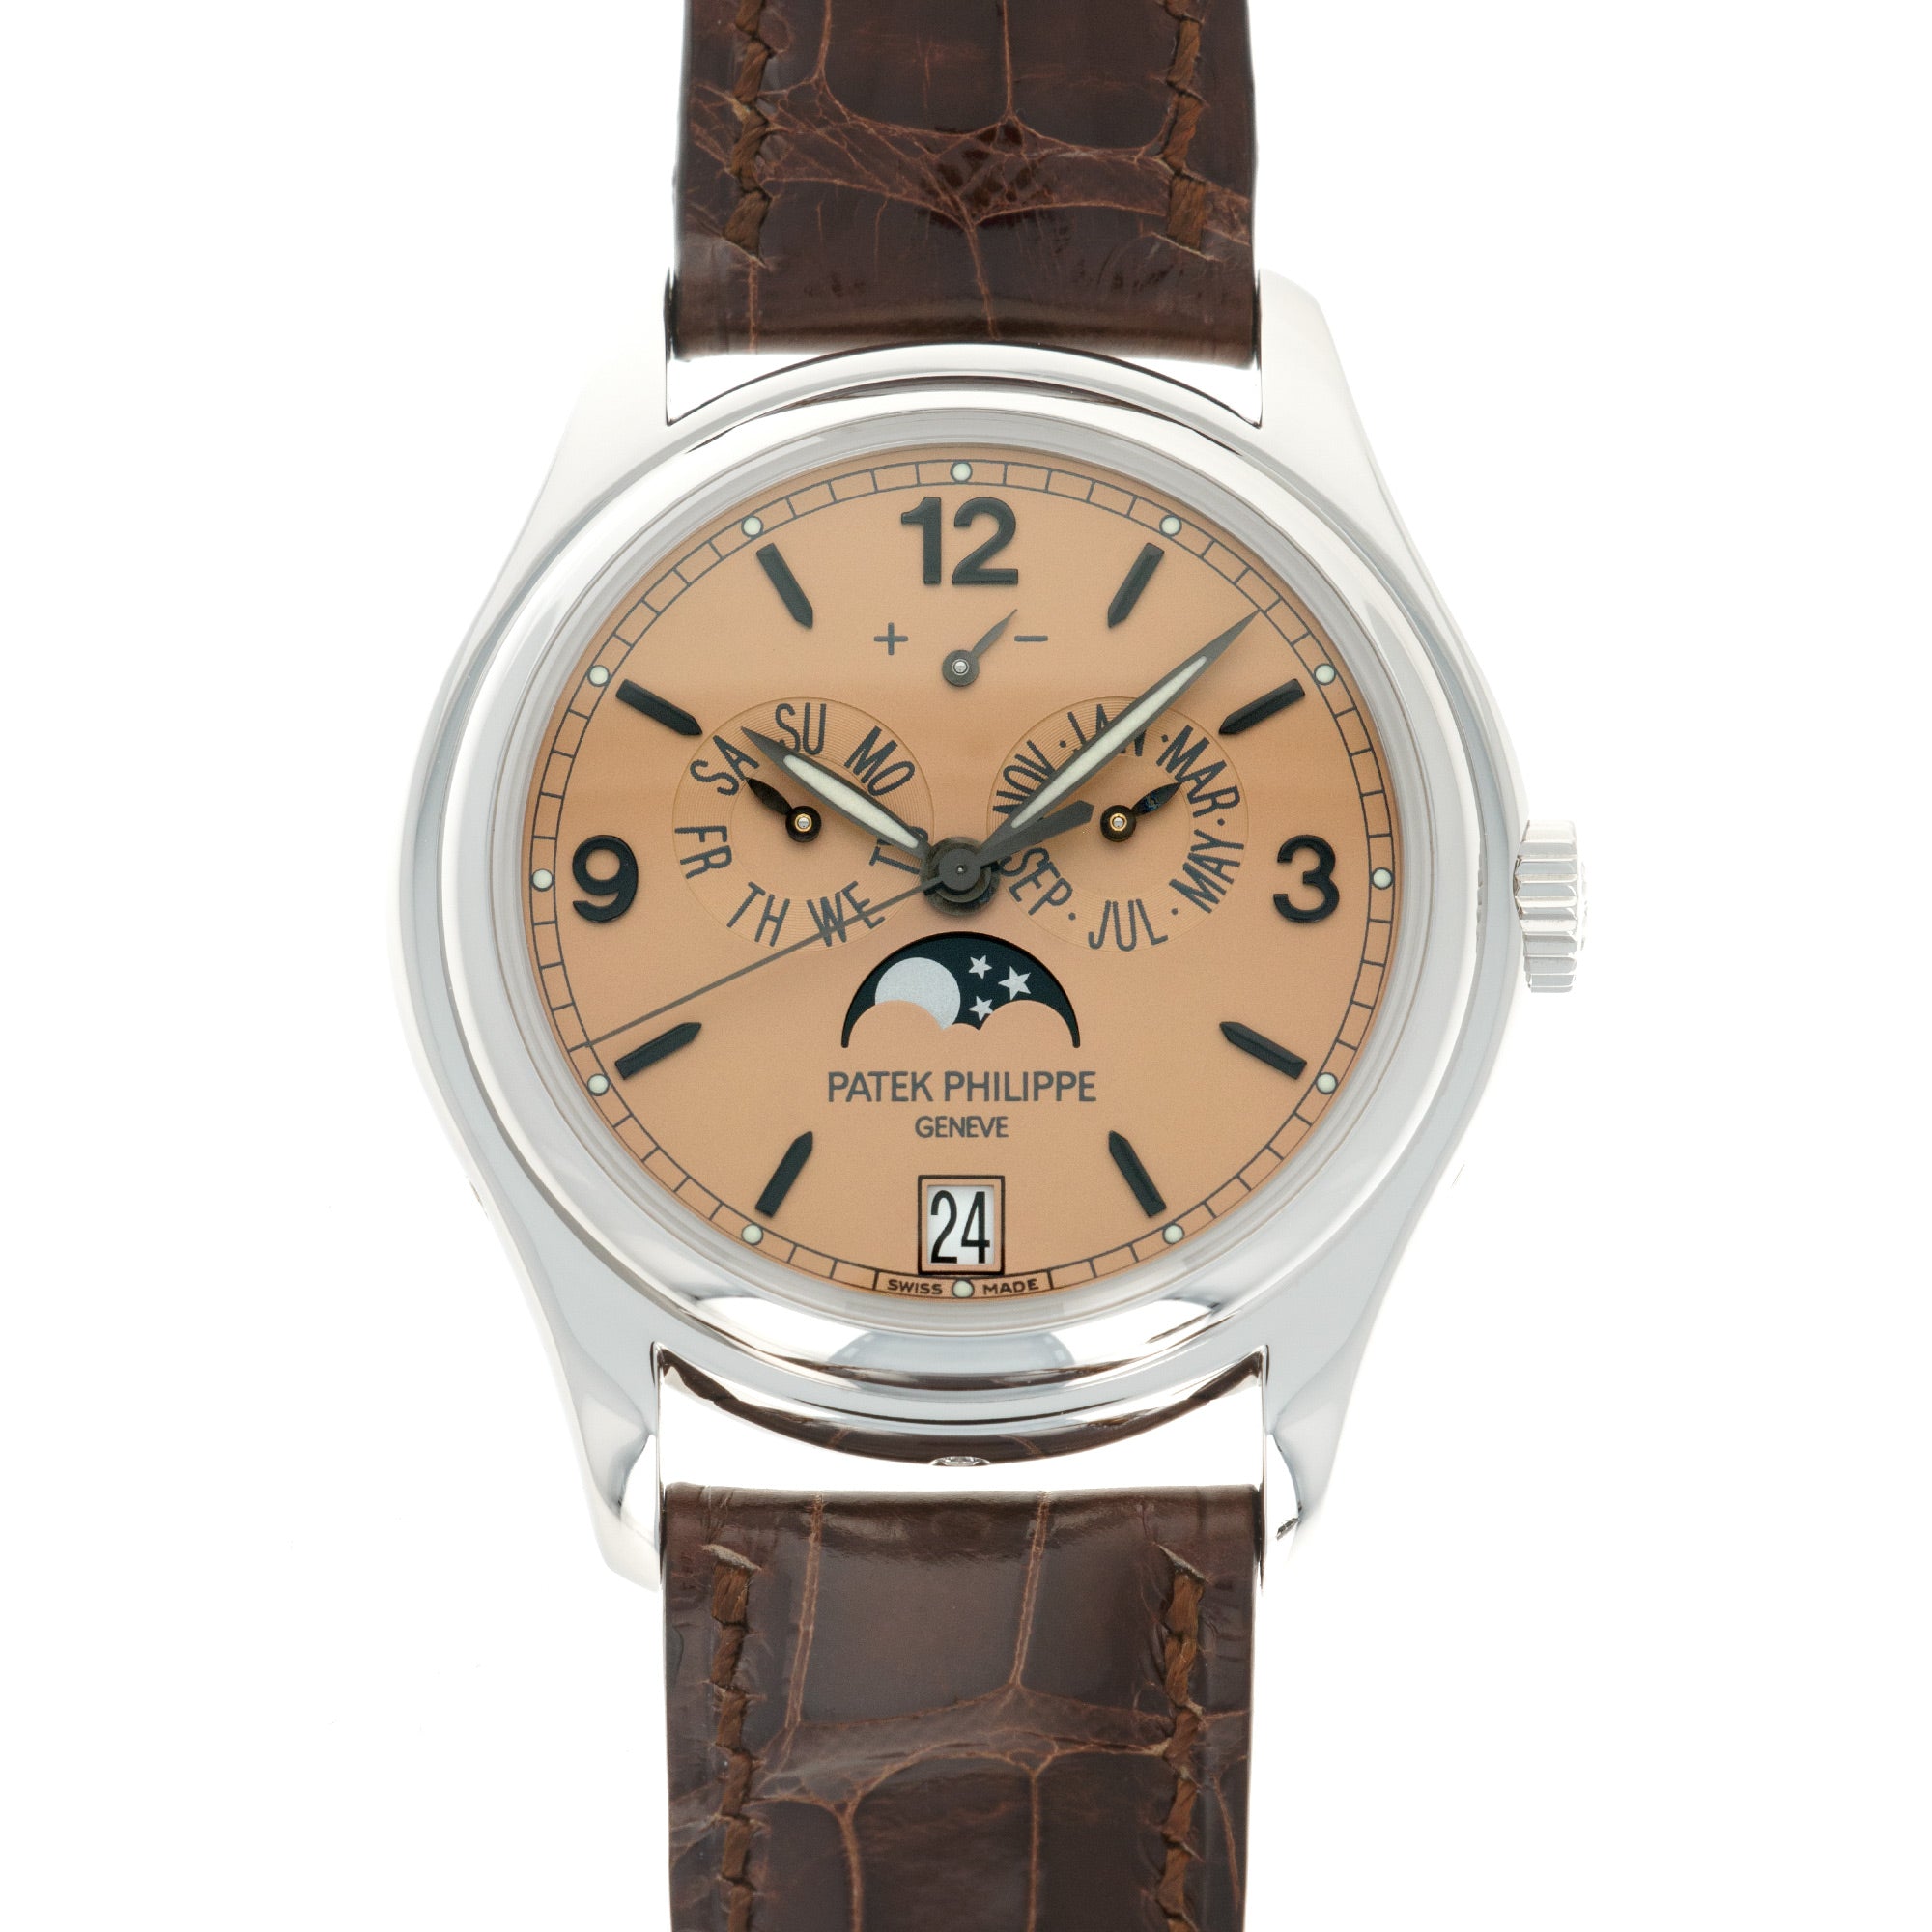 Patek Philippe - Patek Philippe Platinum Advanced Research Annual Calendar Watch Ref. 5450 - The Keystone Watches